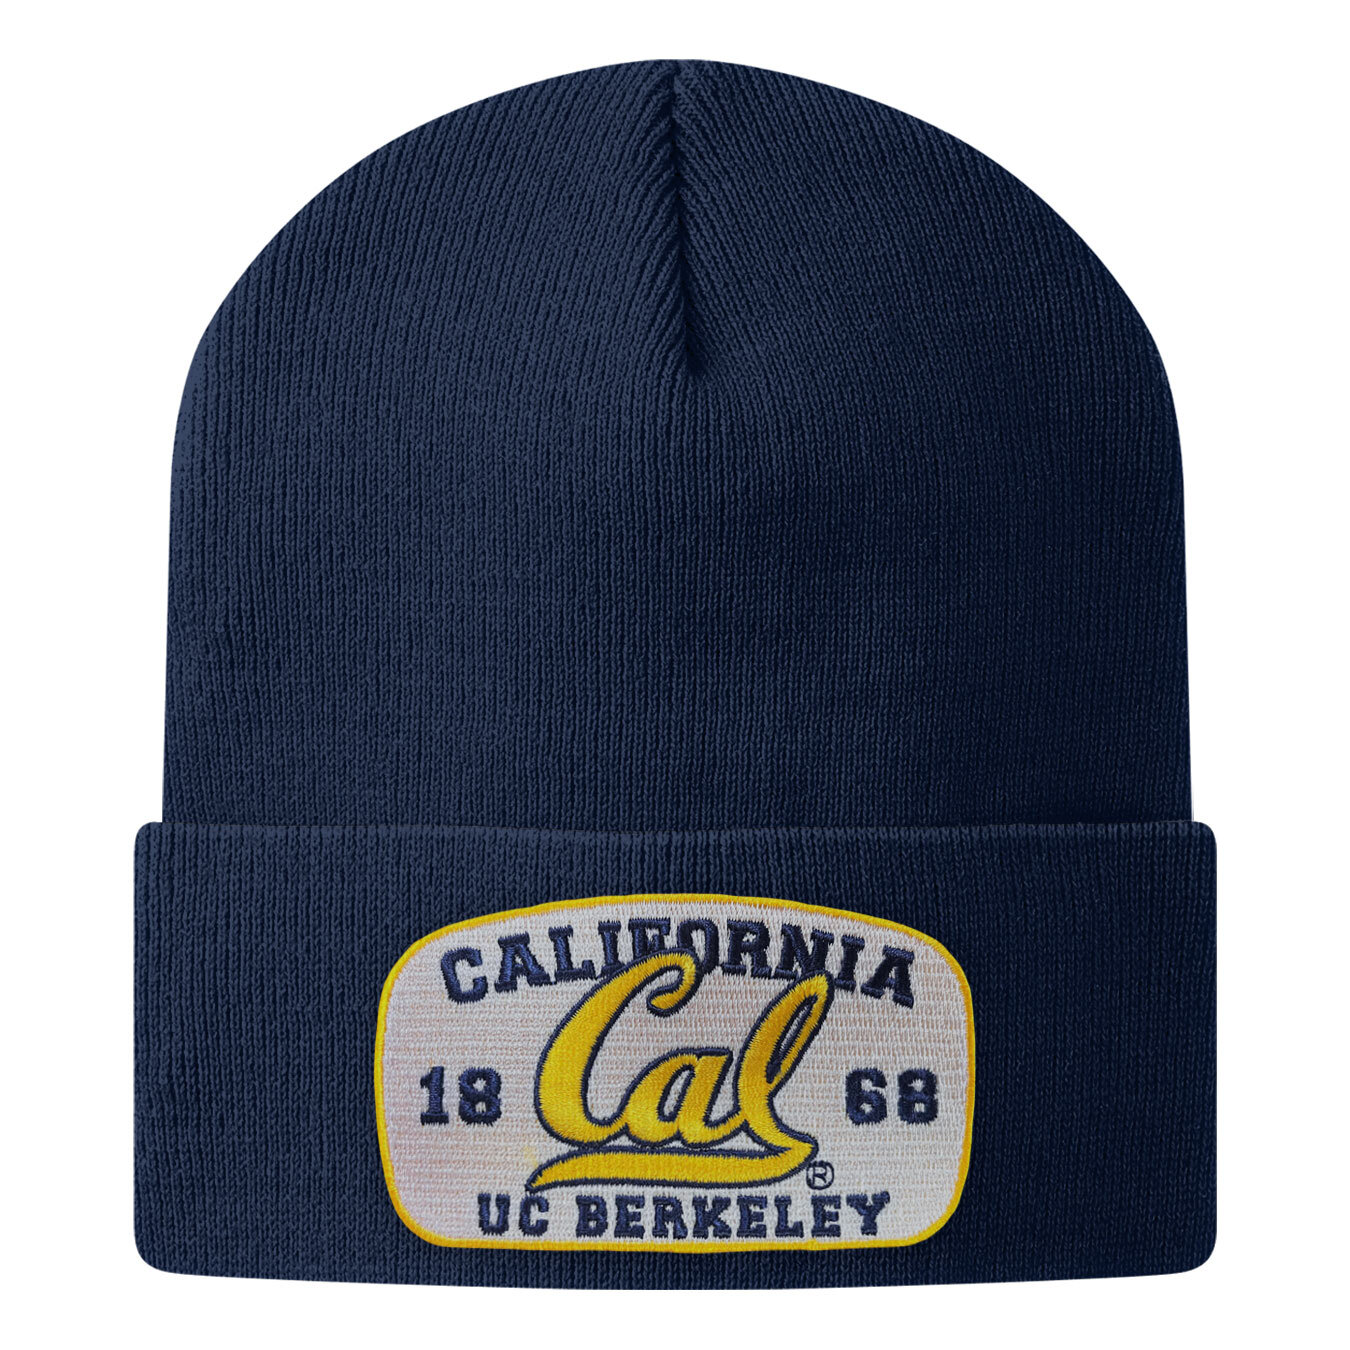 Berkeley - University of California Beanie